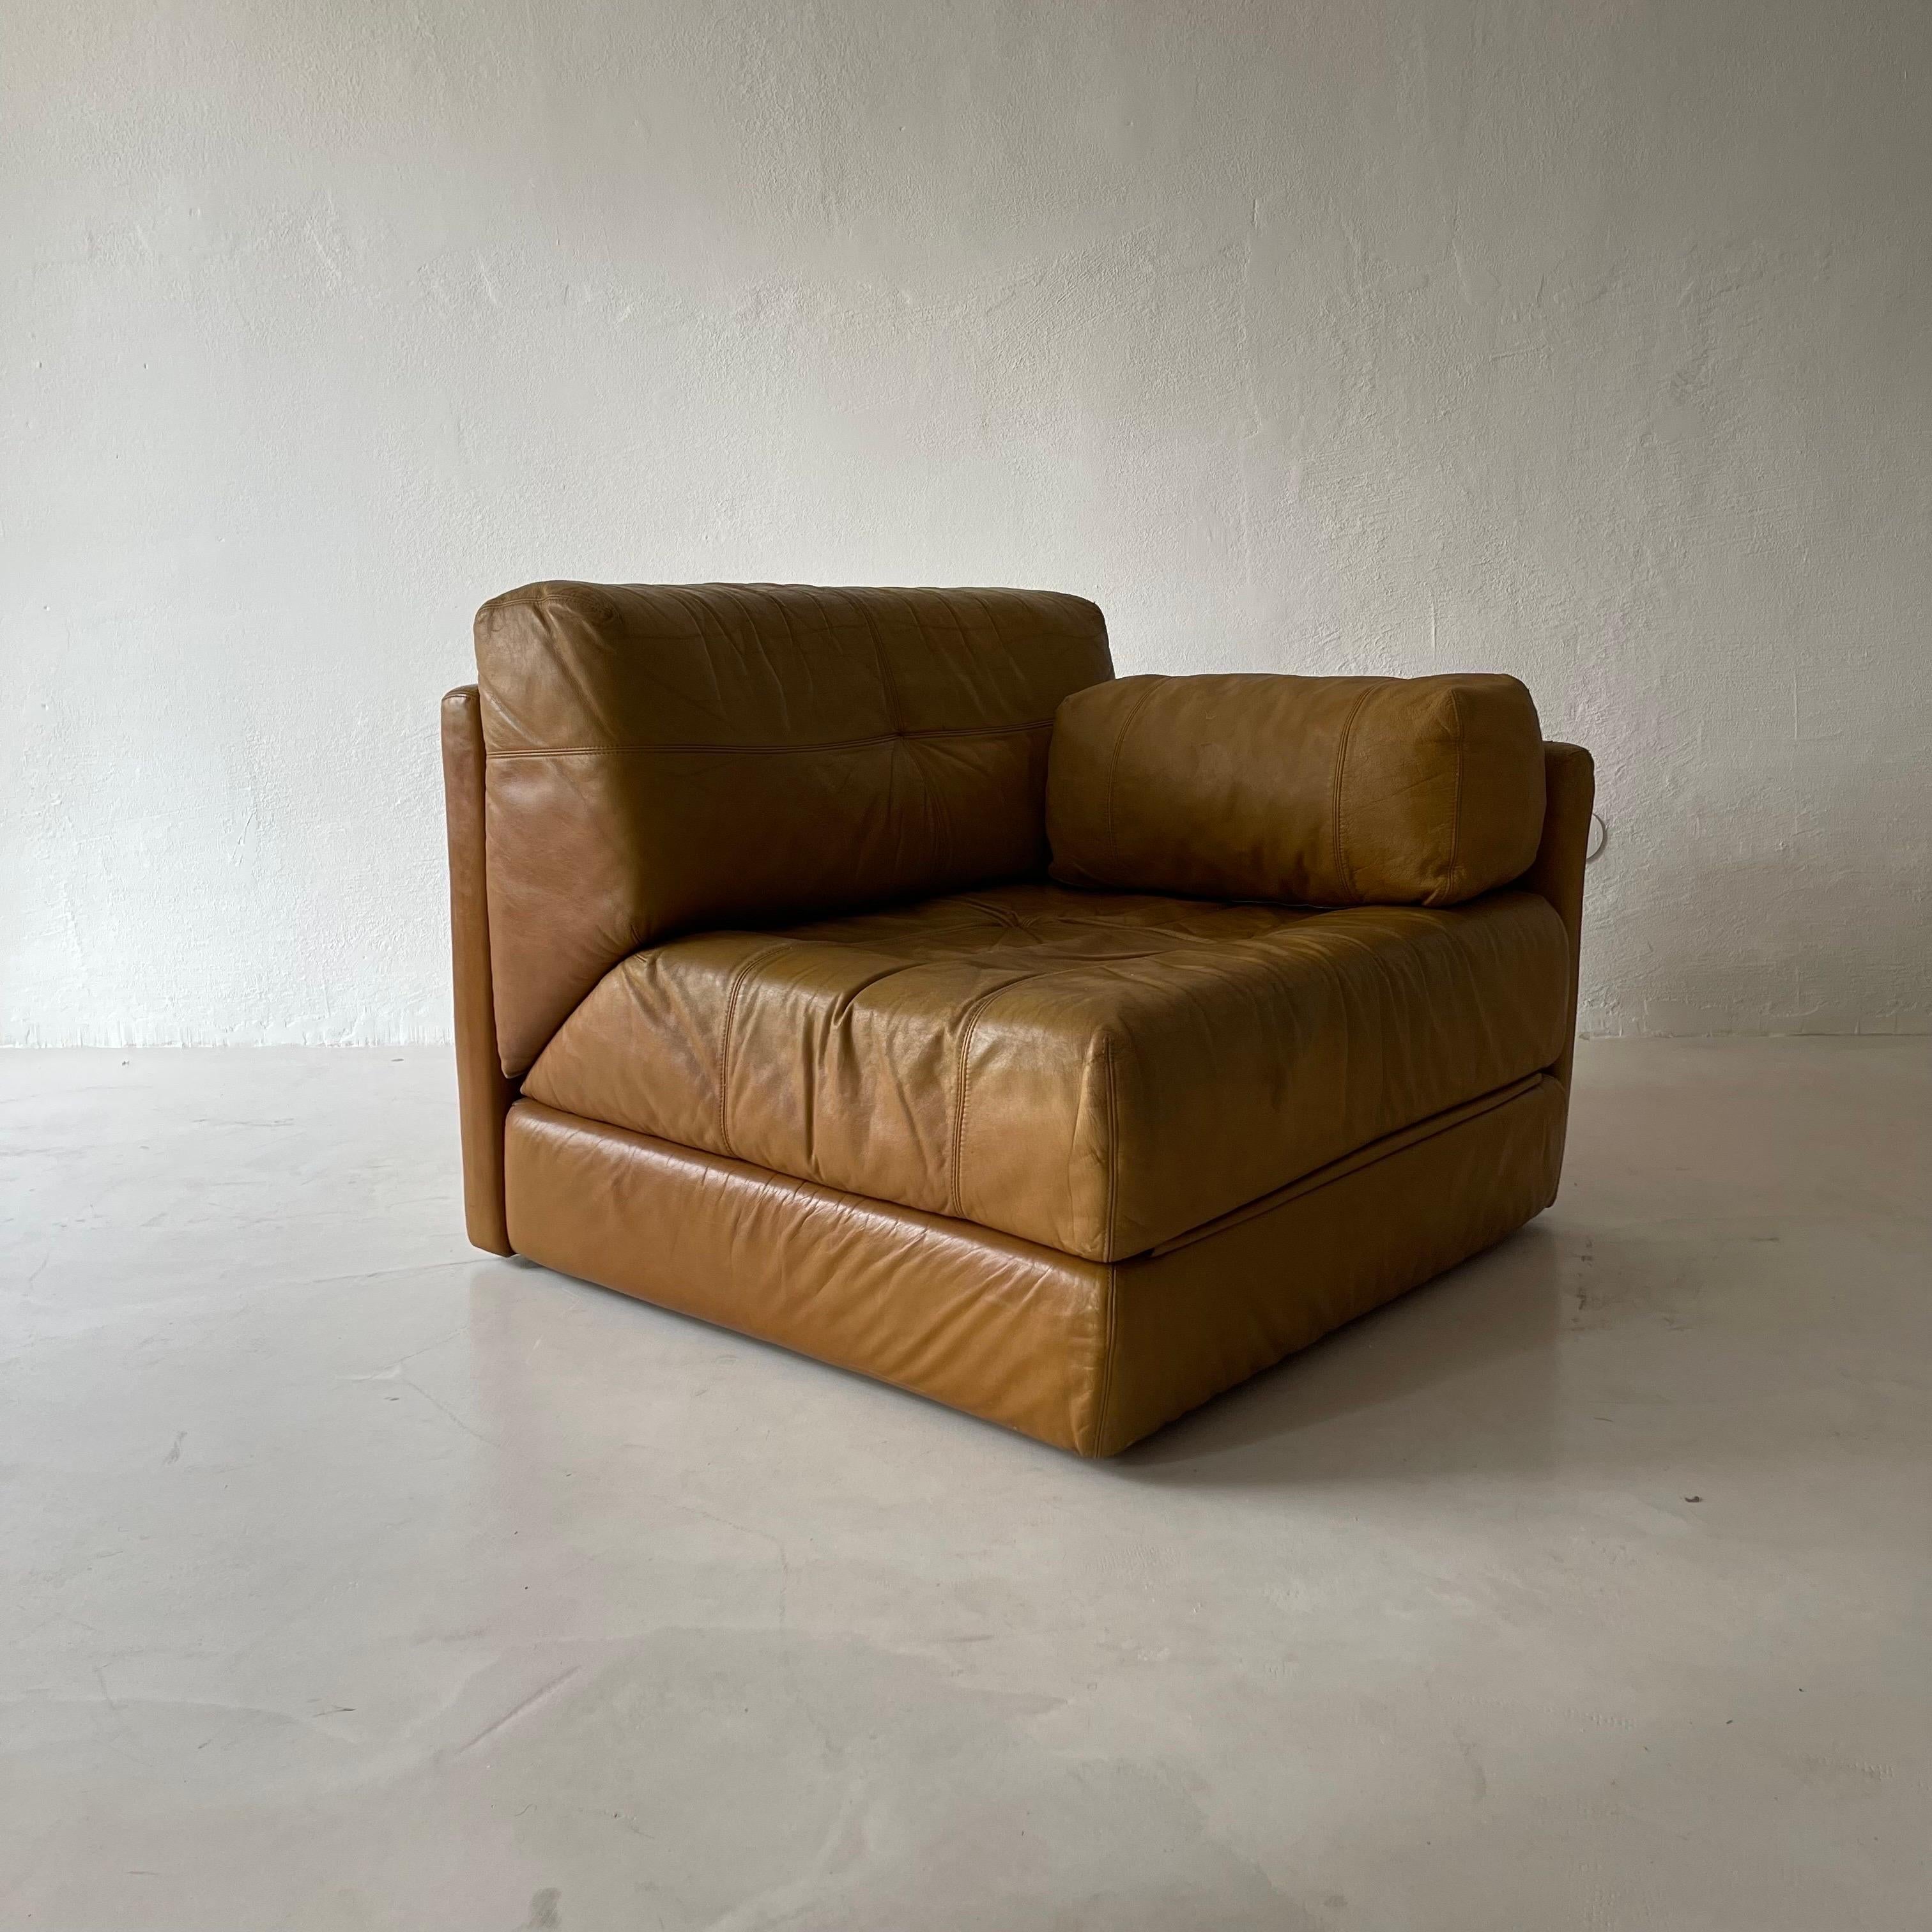 Wittmann Atrium Cognac Leather Pair Lounge Chairs, 1970s For Sale 4